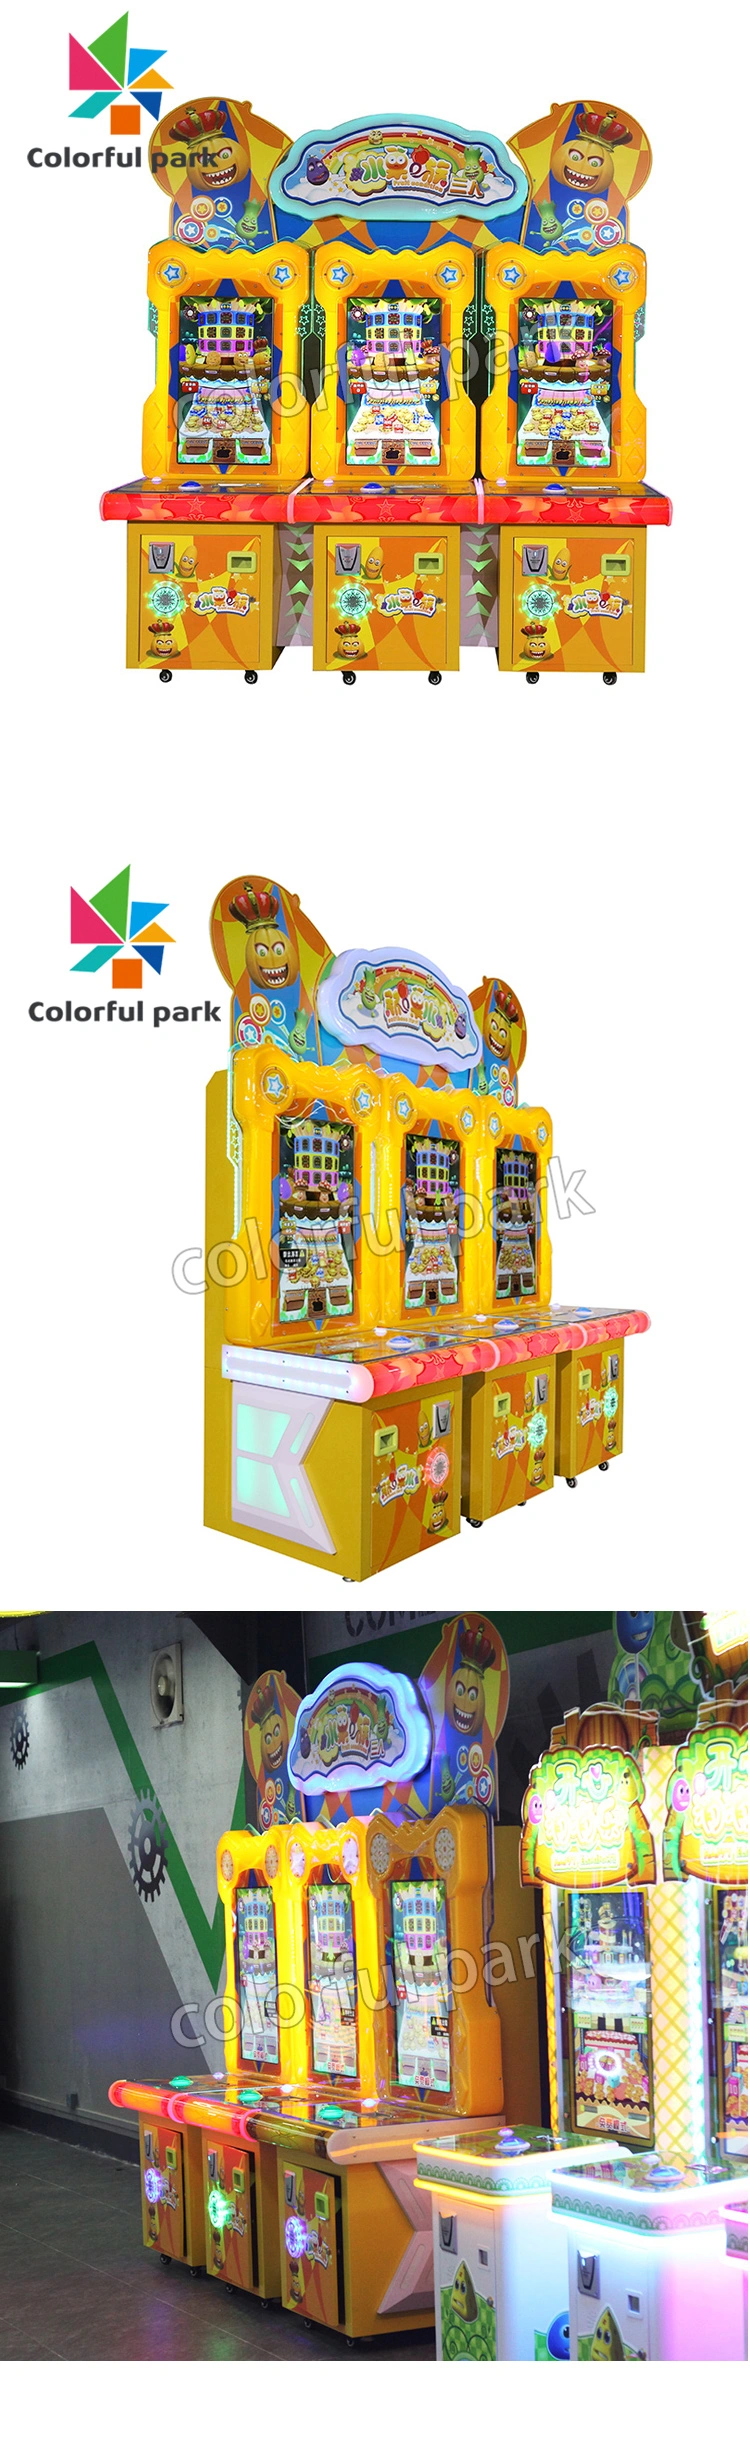 Whole Arcade Machines Cane Machine Arcade Game Video Game Machine Lottery Ticket Game